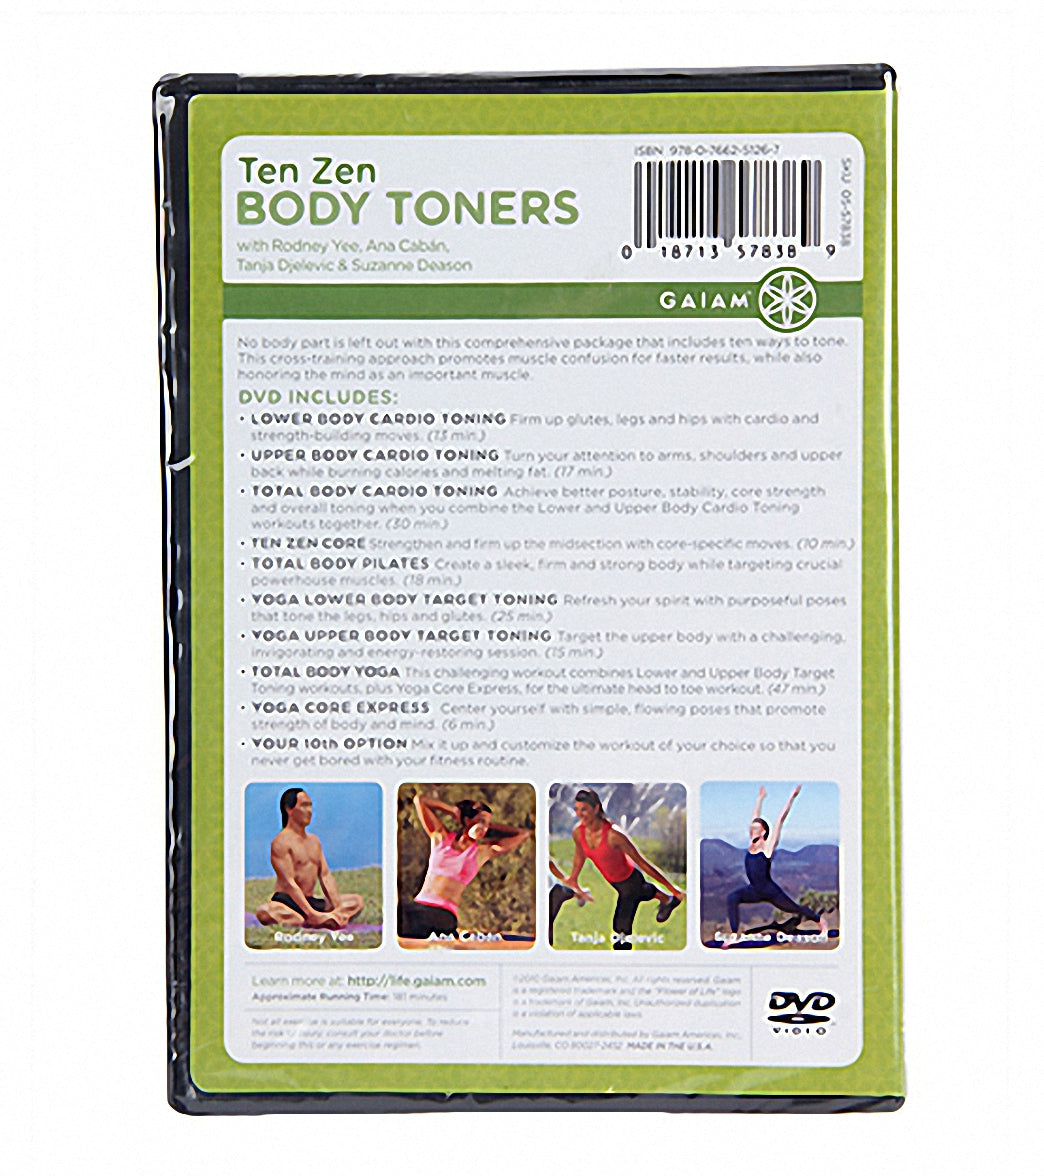 Gaiam Ten Zen Body Toners DVD at